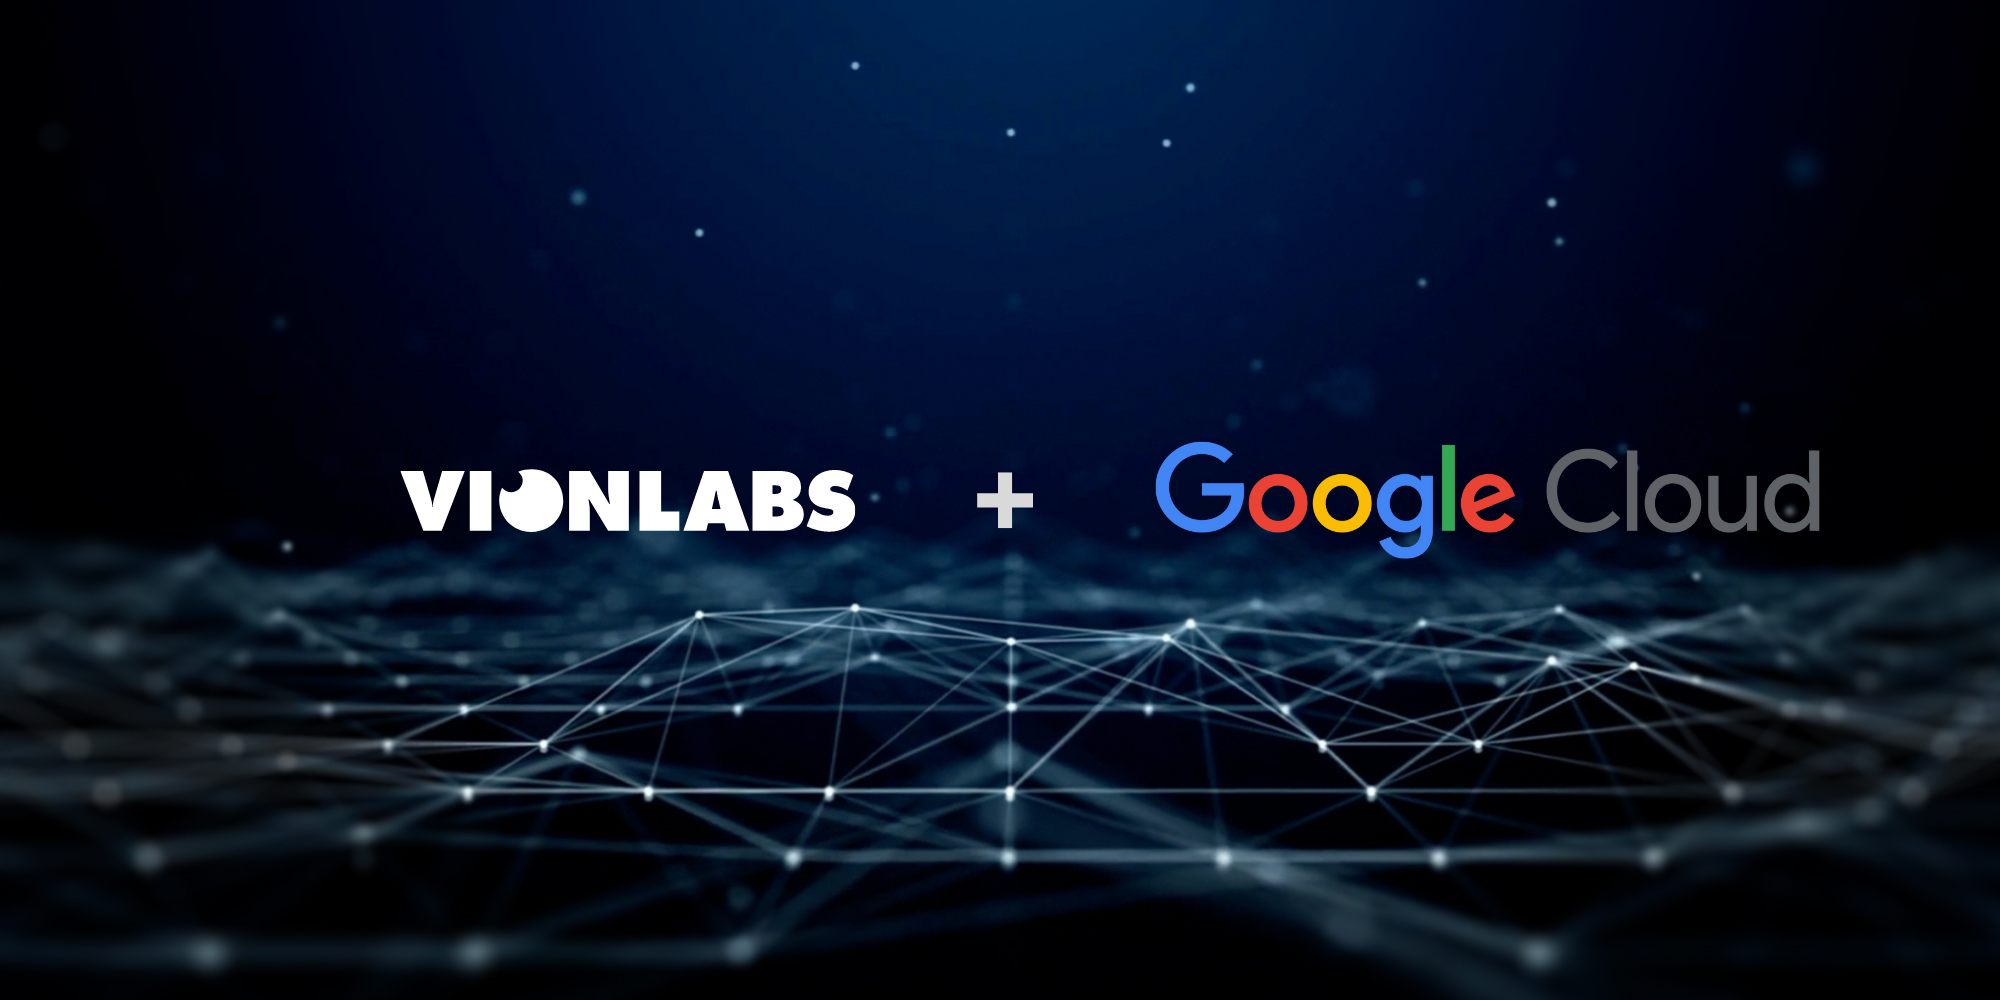 Google Cloud and Vionlabs